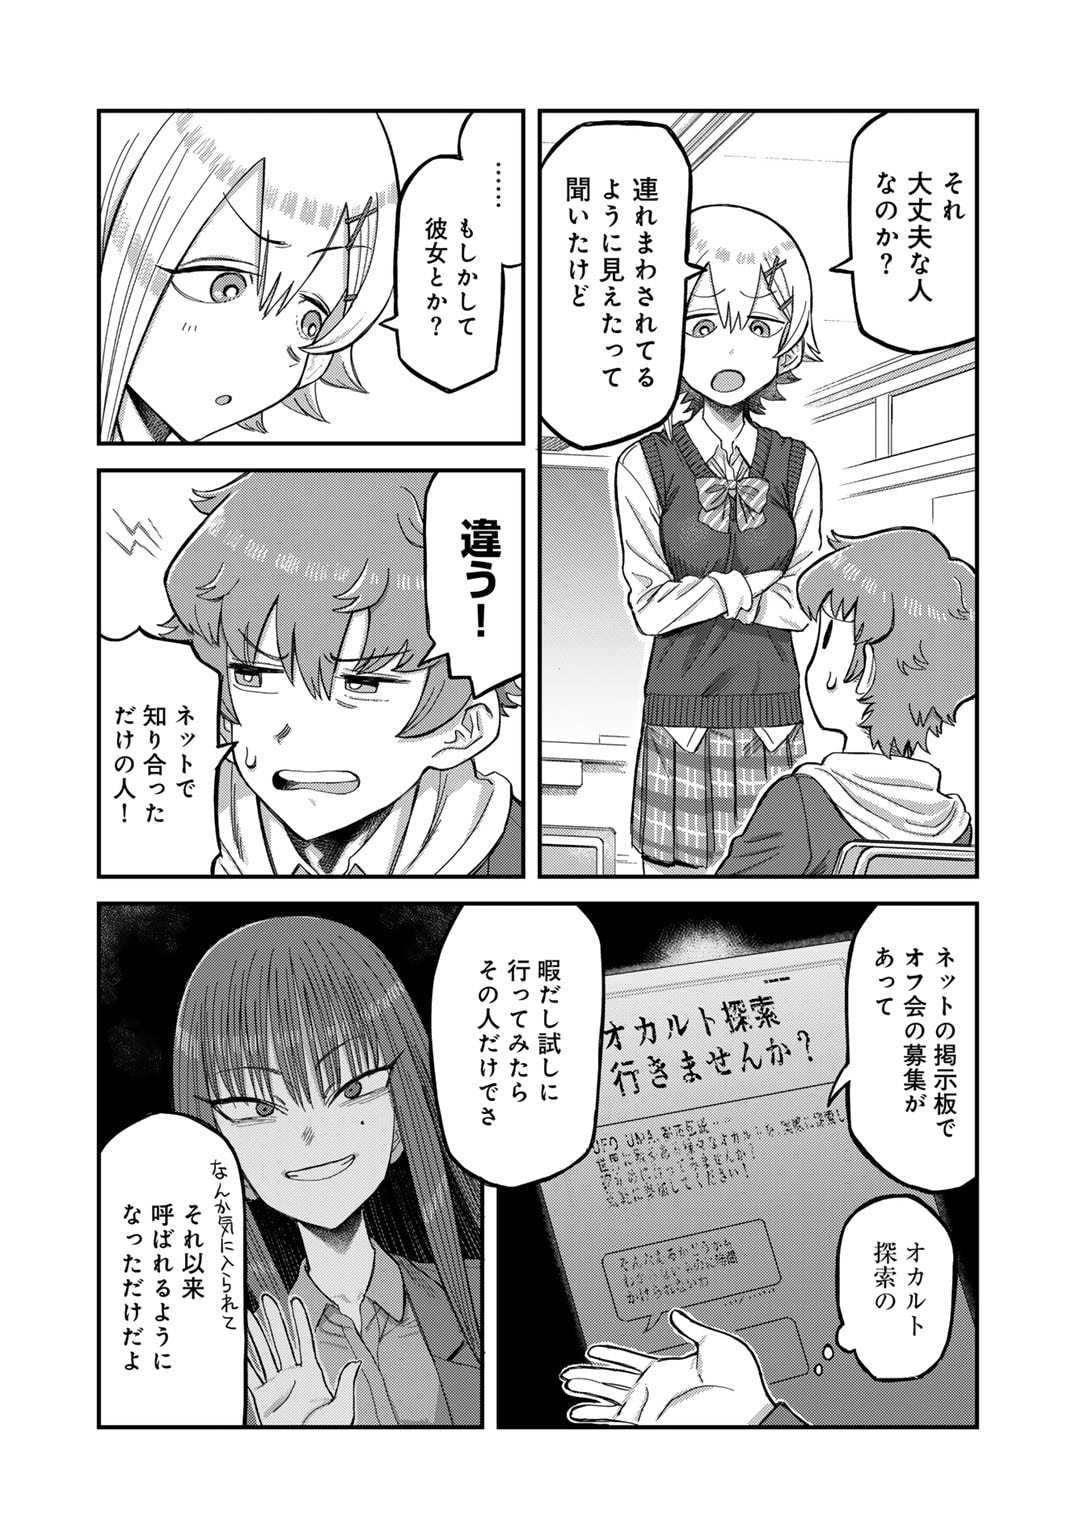 Kurono-san wa Occult ga Suki! - Chapter 3 - Page 2